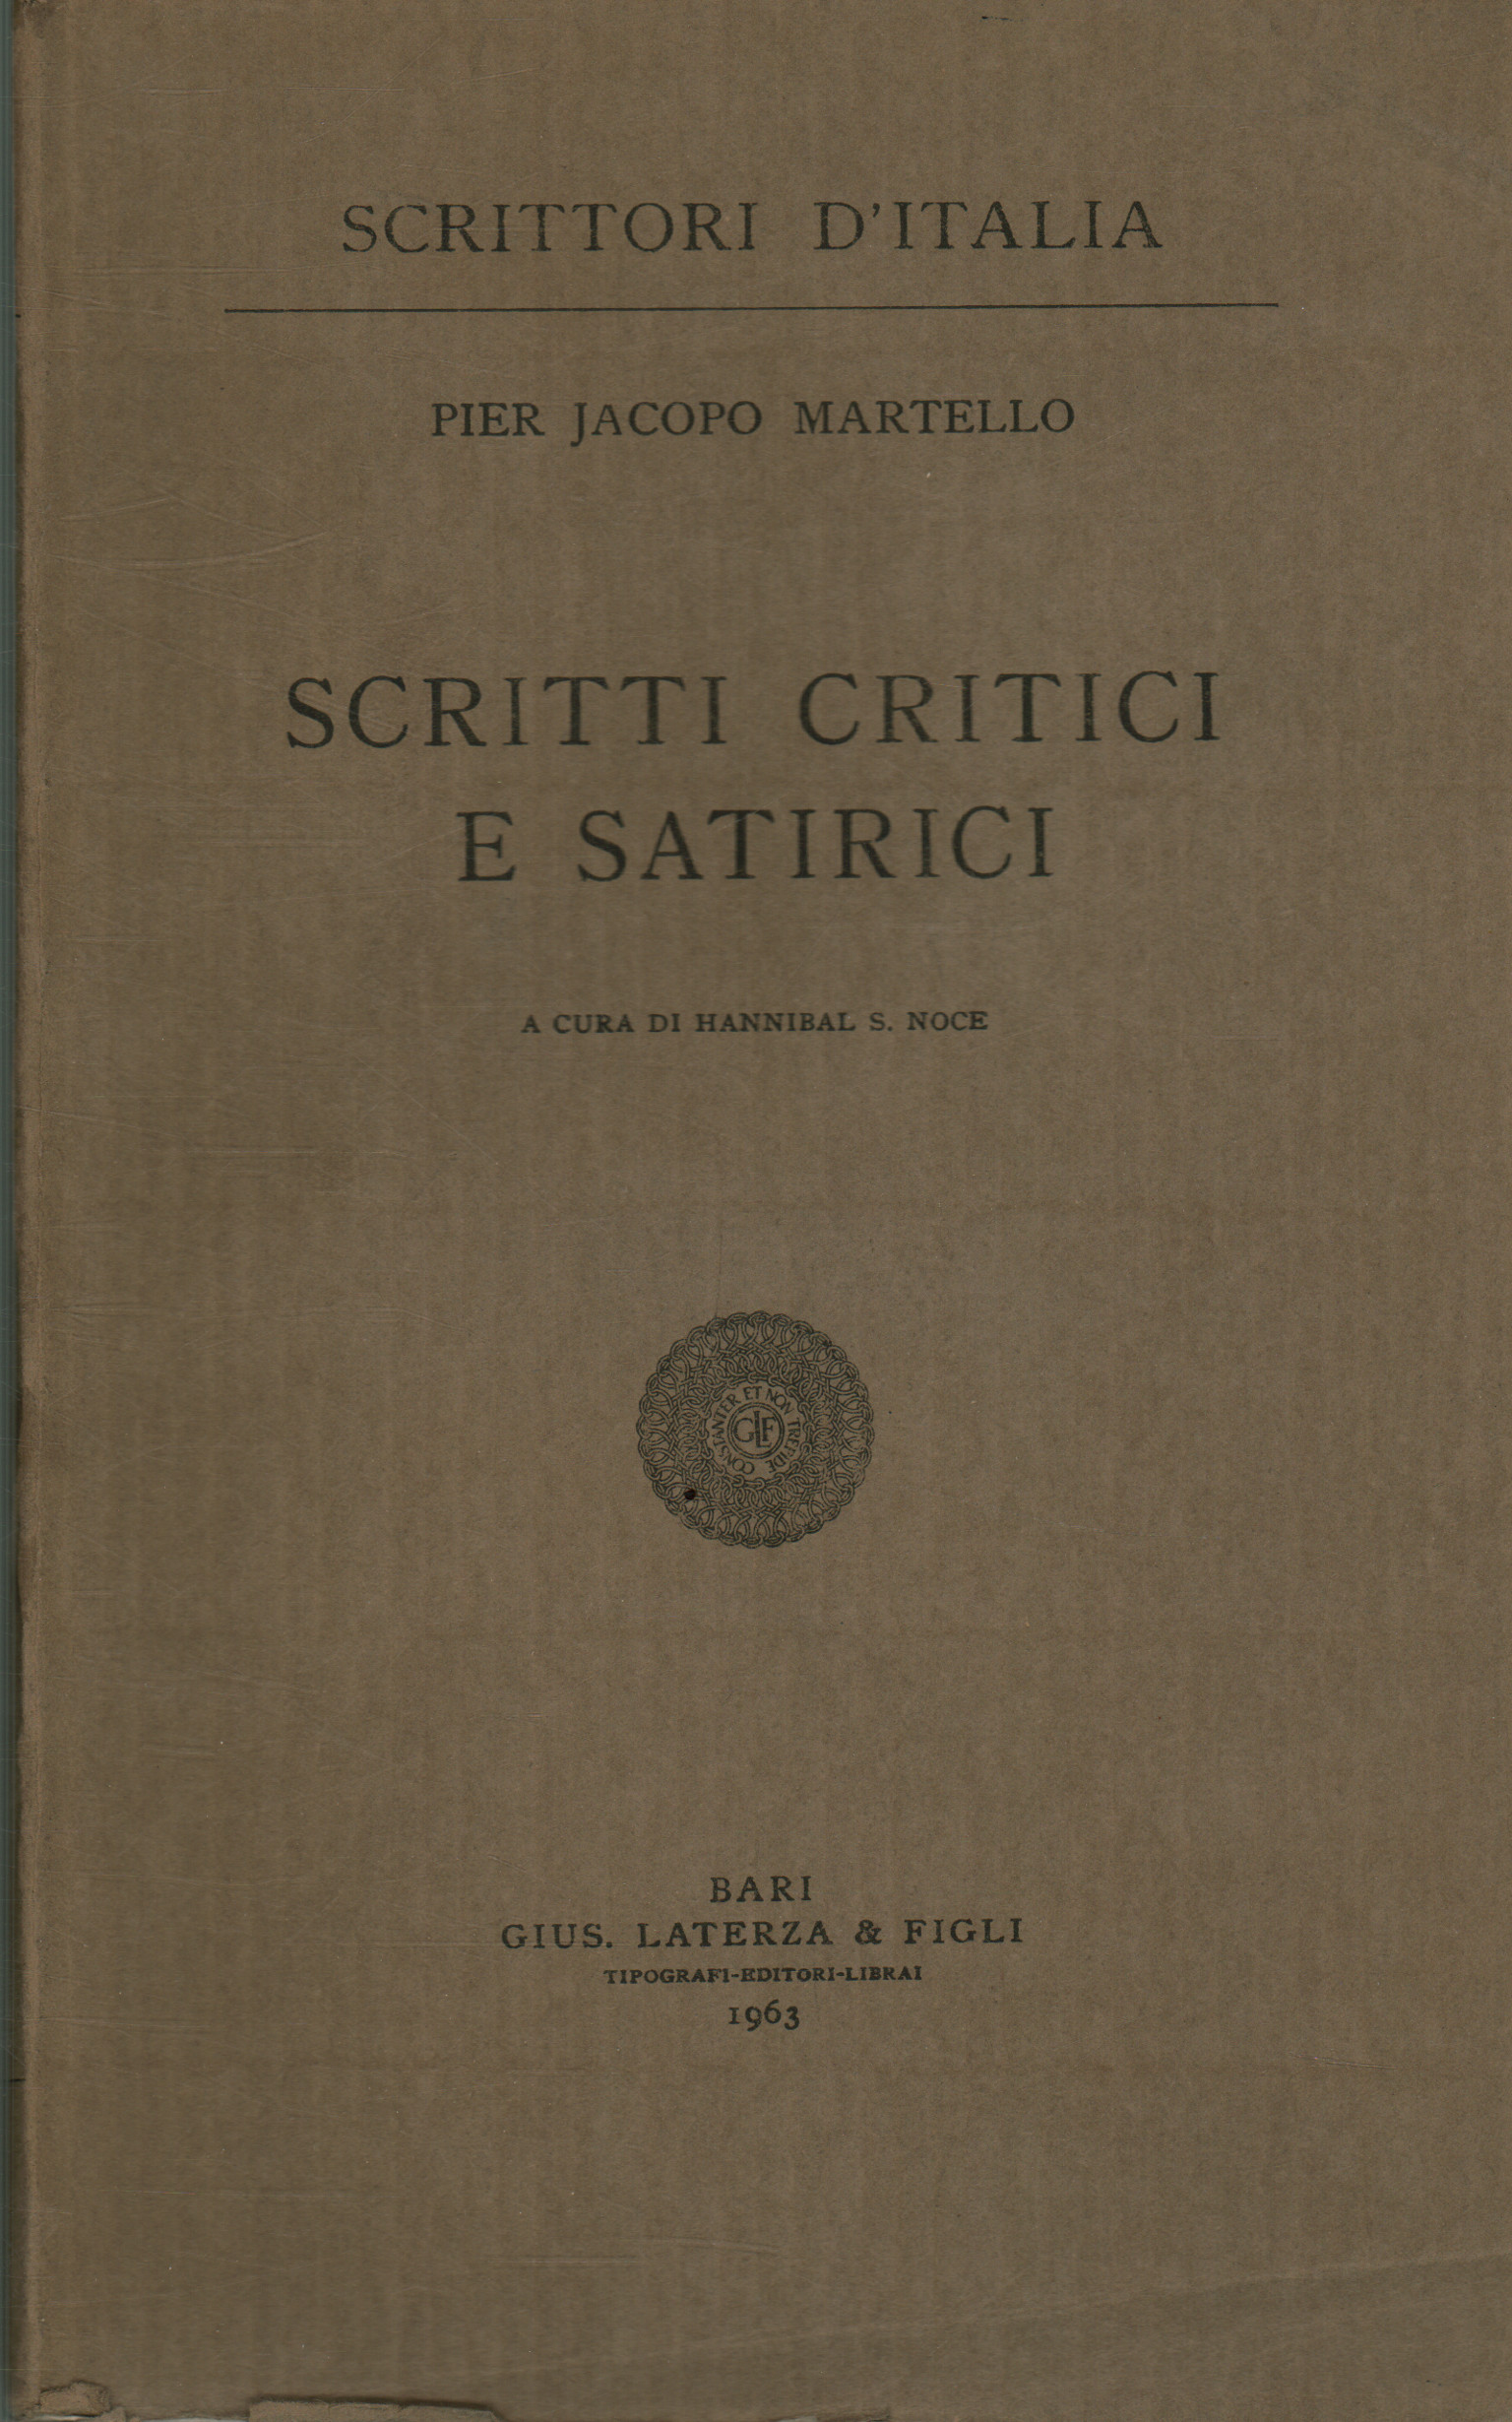 Escritos críticos y satíricos, Pier Jacopo Martello